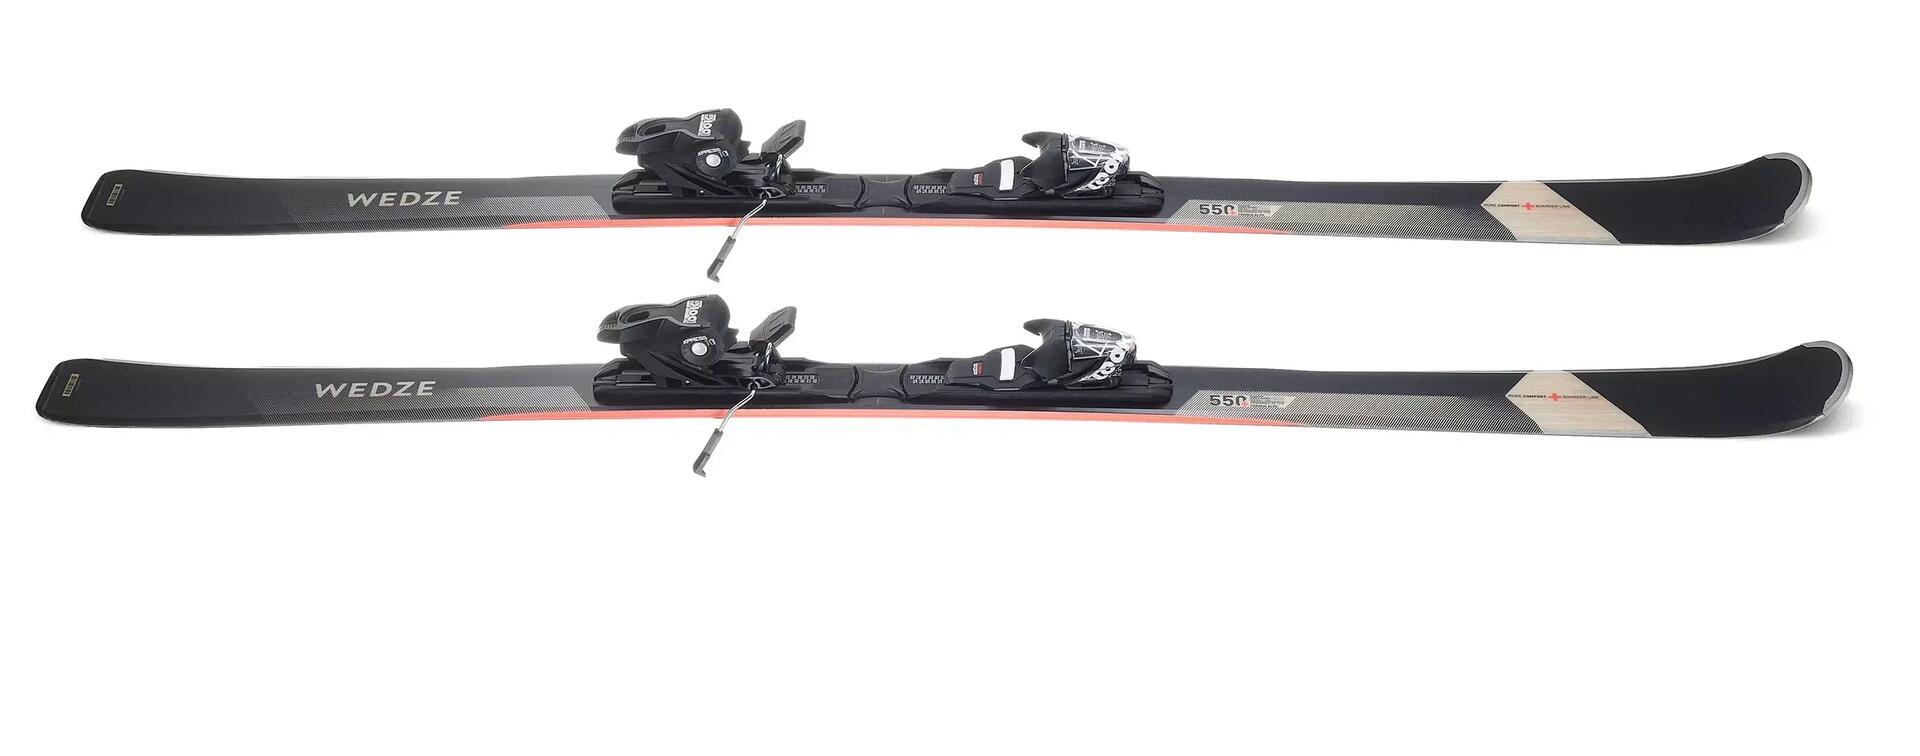 skis cross 550+ wedze